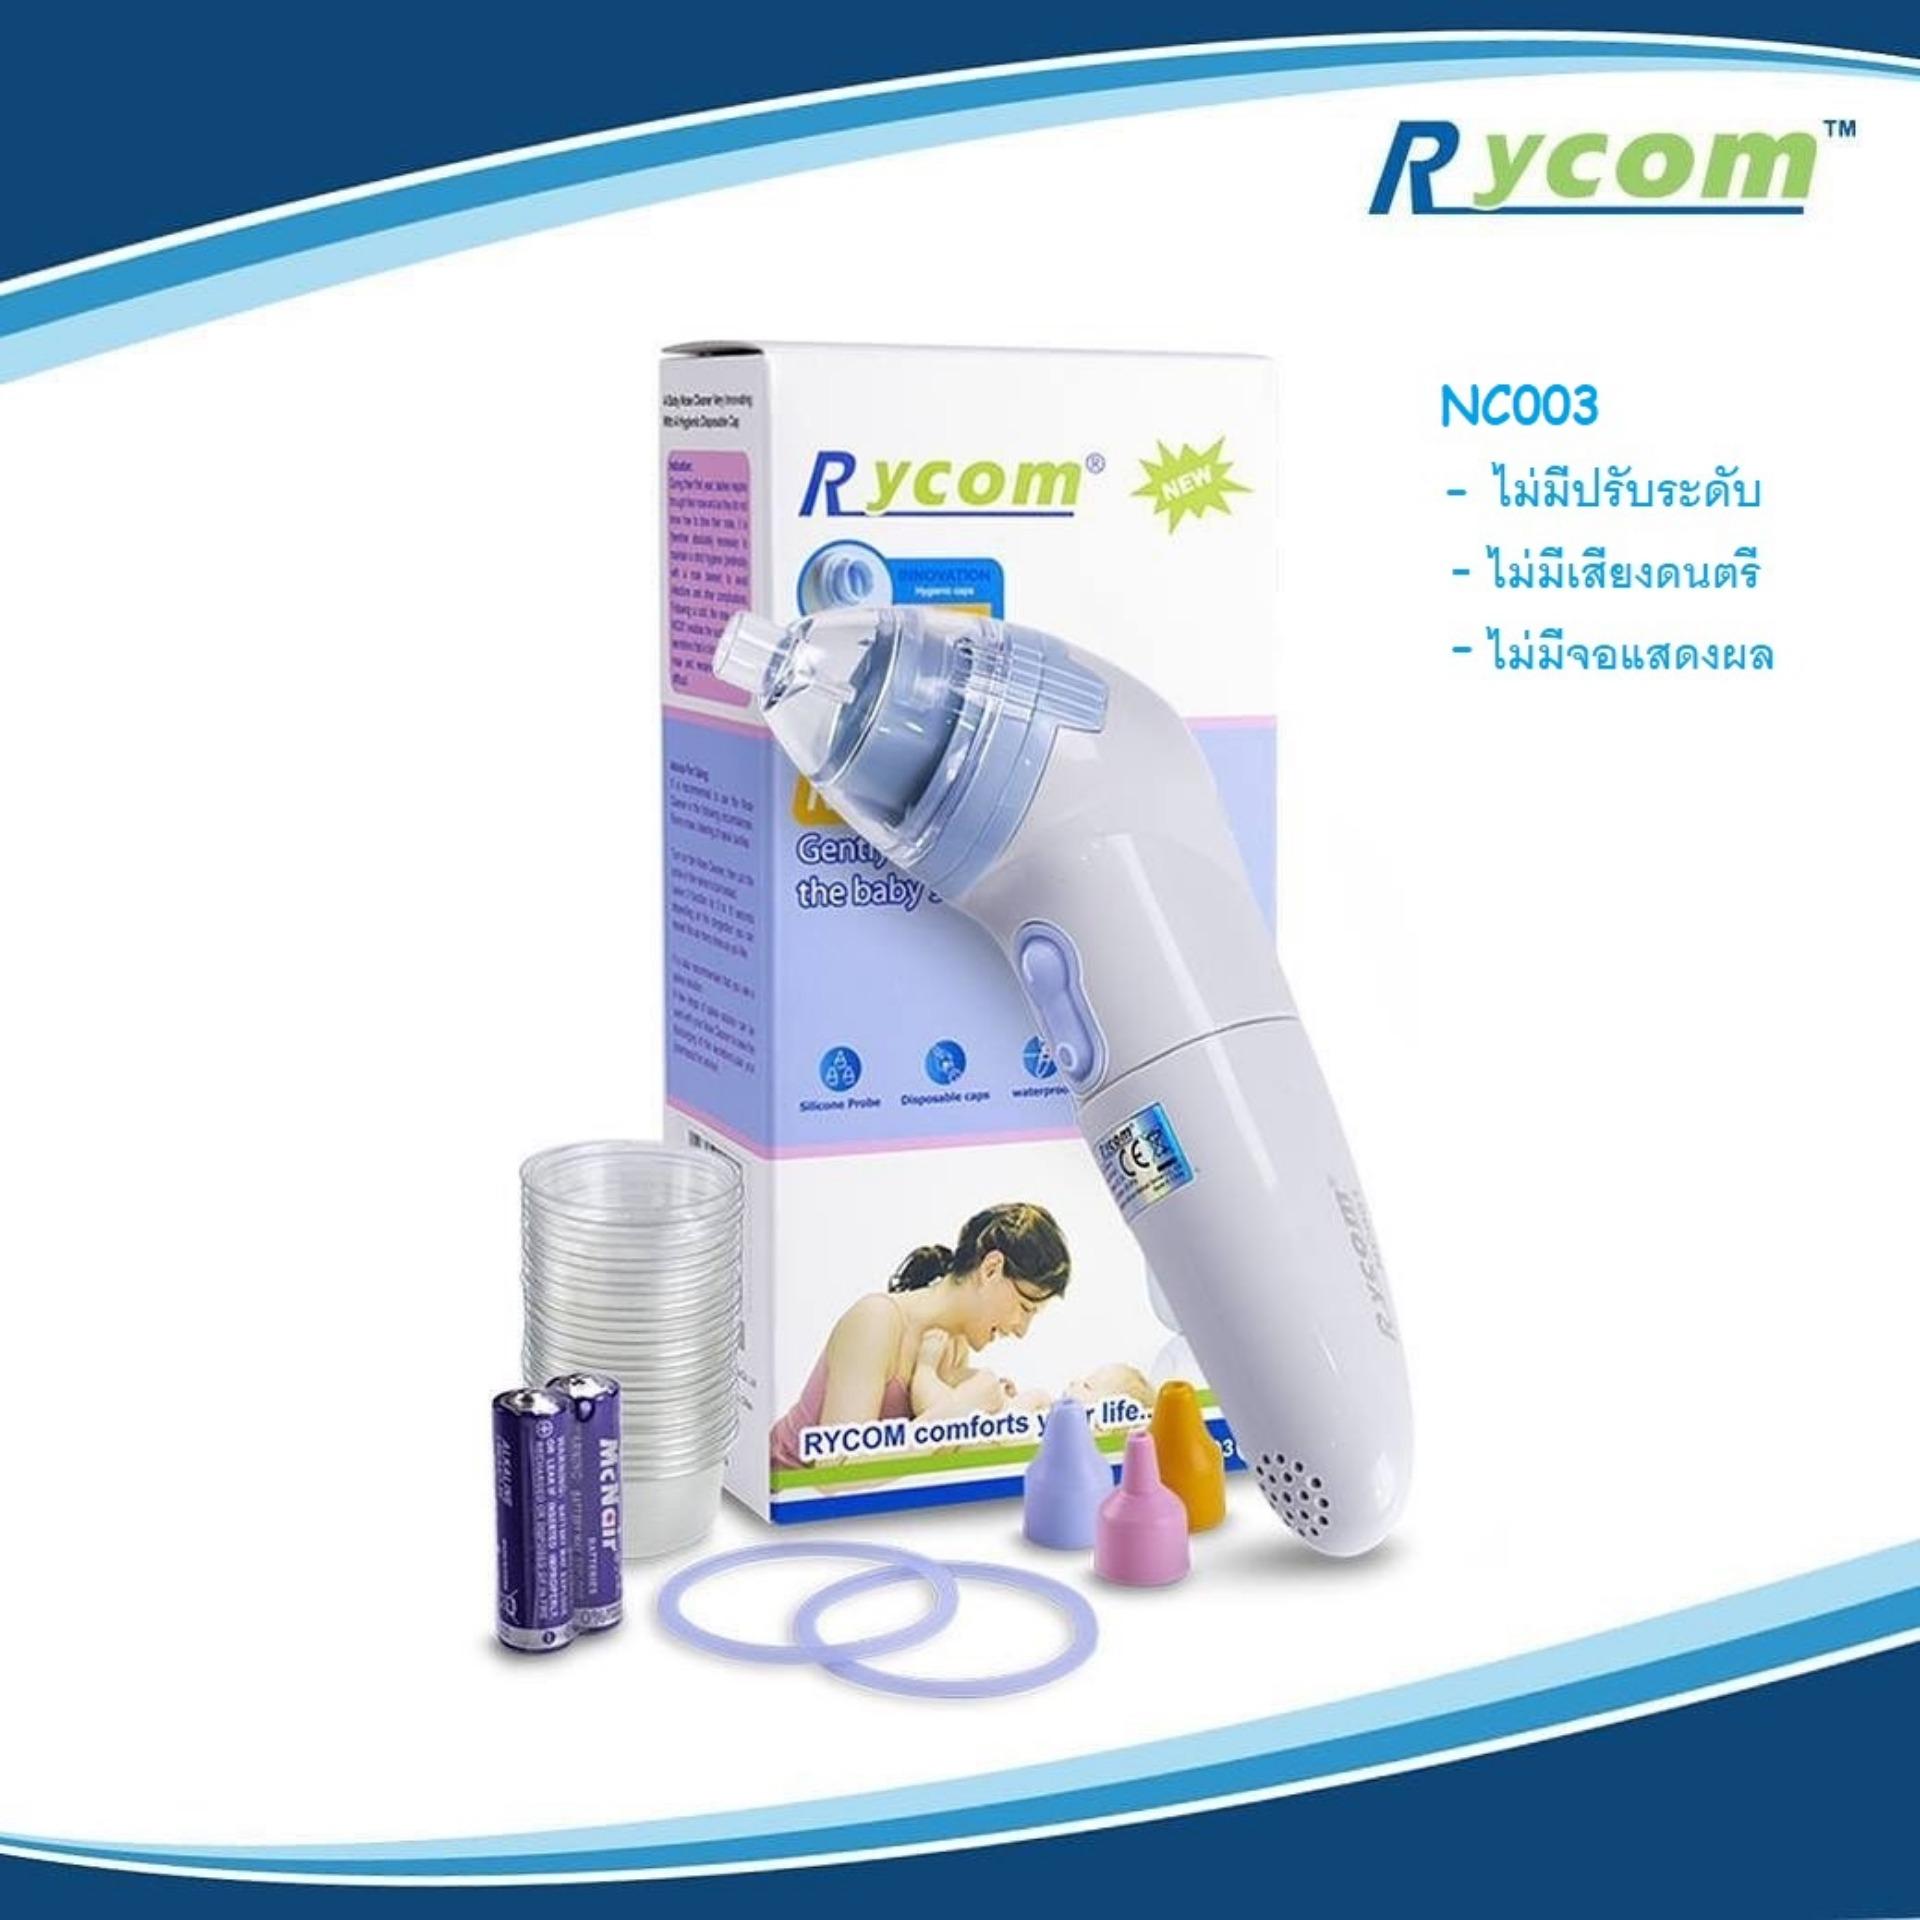 Rycom เครื่องดูดน้ำมูกสำหรับเด็ก Baby Nose Cleaner รุ่น NC003